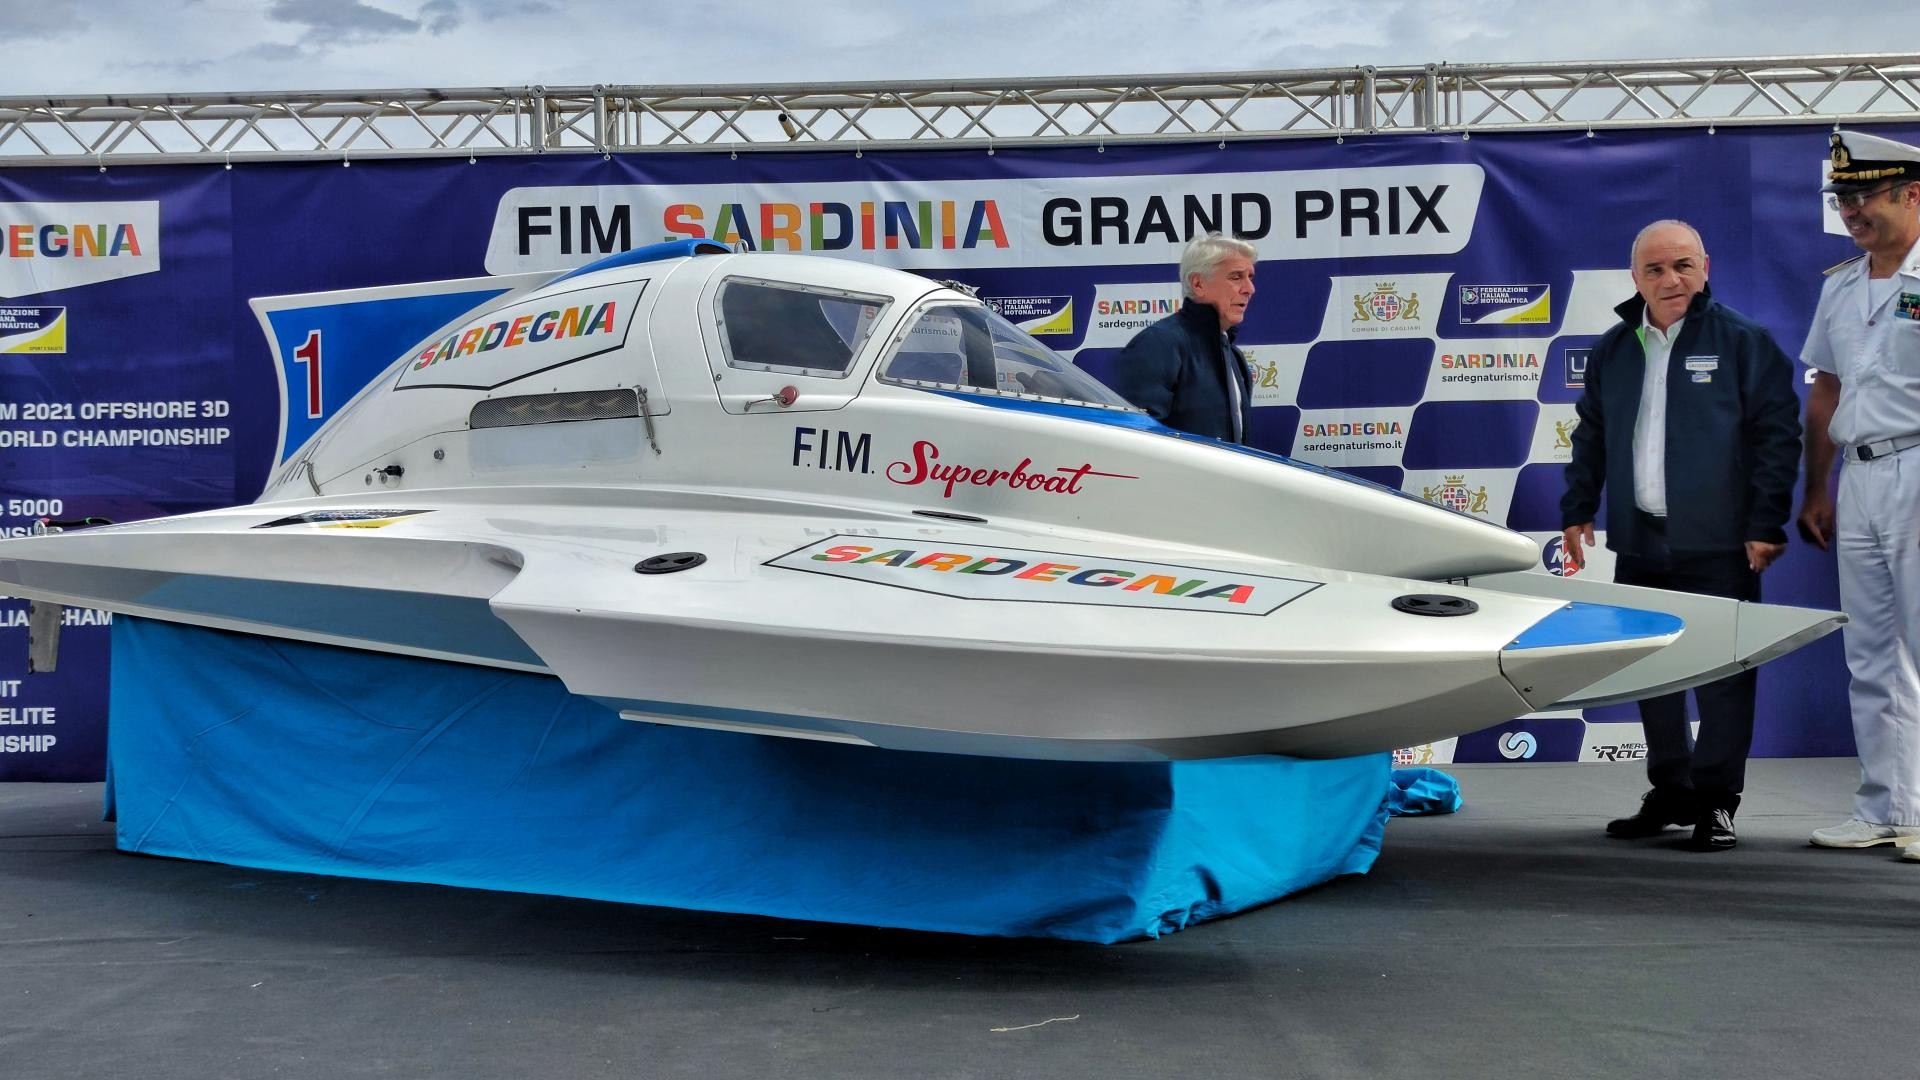 Sardinia Grand Prix, Gara-1 posticipata a venerdi mattina